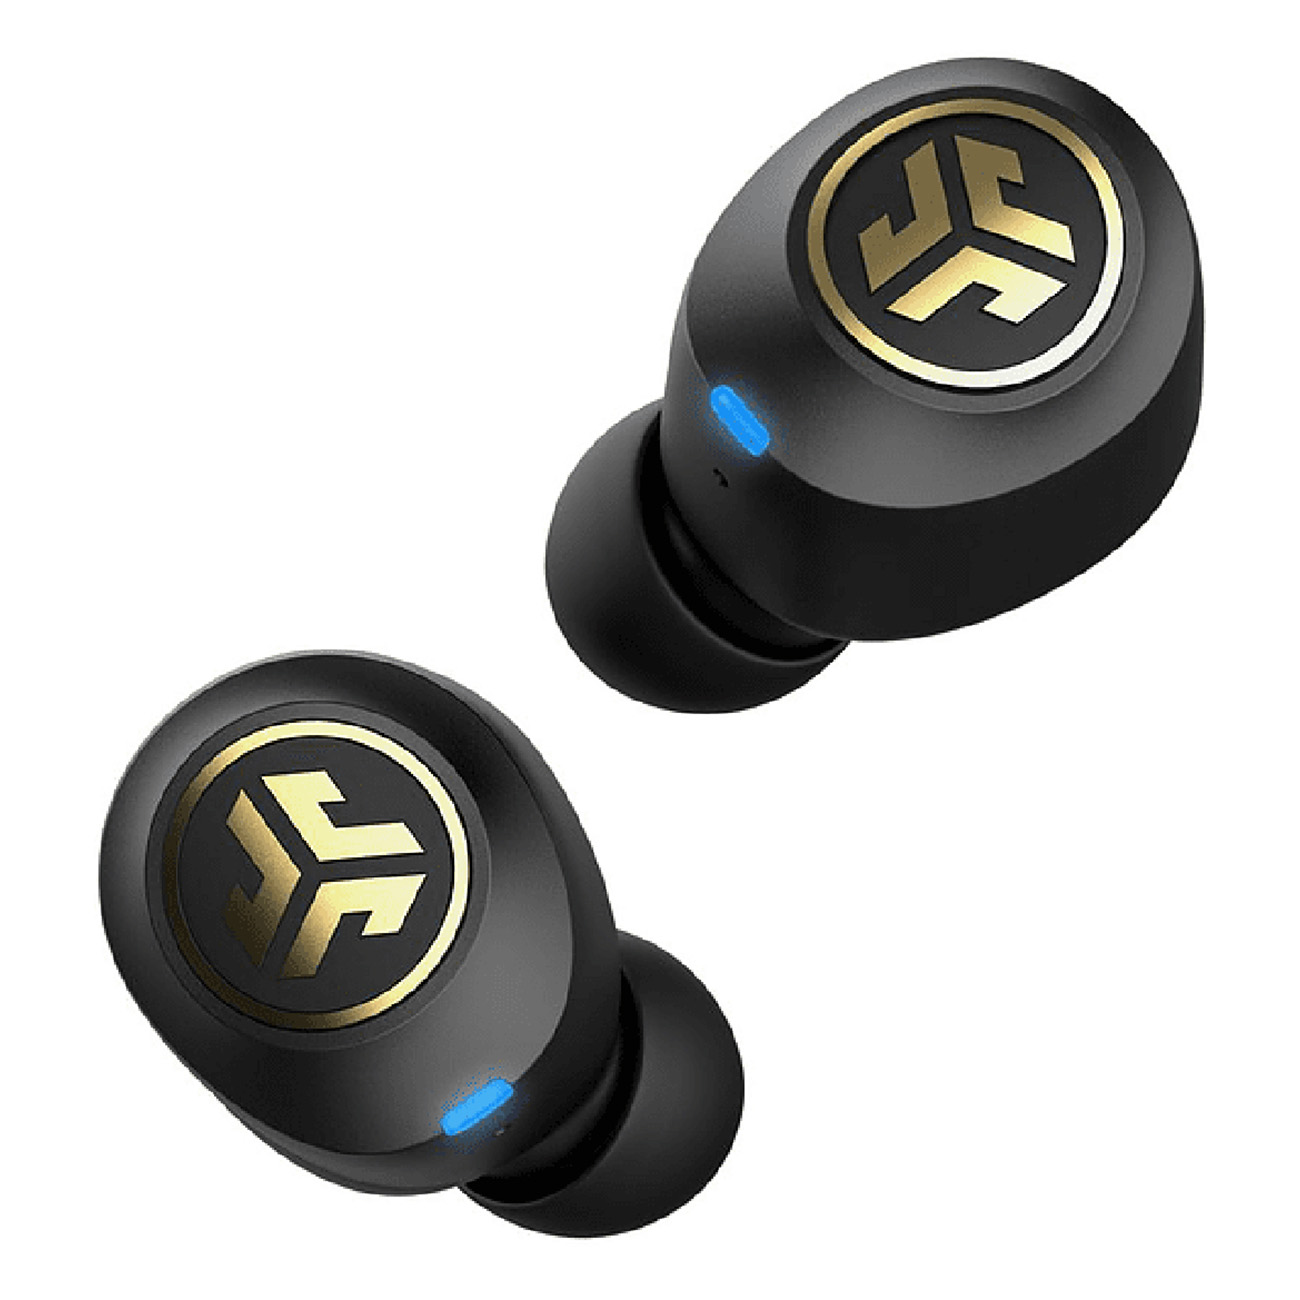 Air JBuds In-ear Bluetooth JLAB Icon, Kopfhörer schwarz